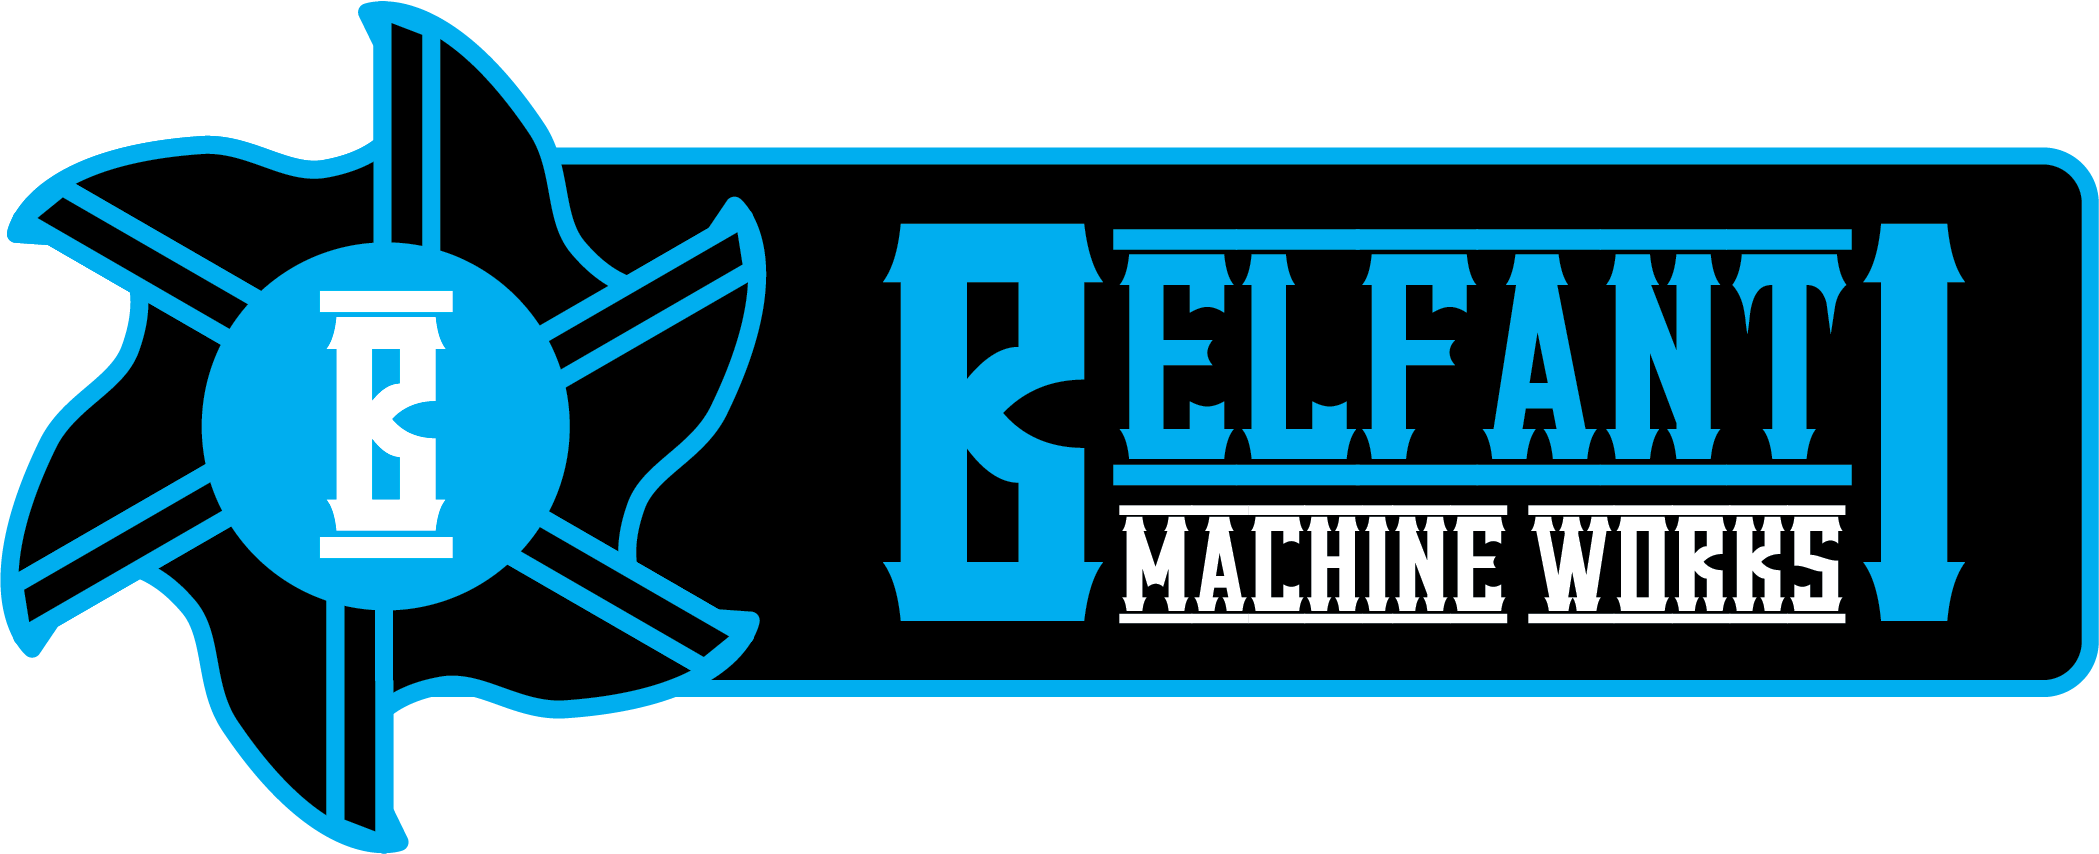 Belfanti Machine Works